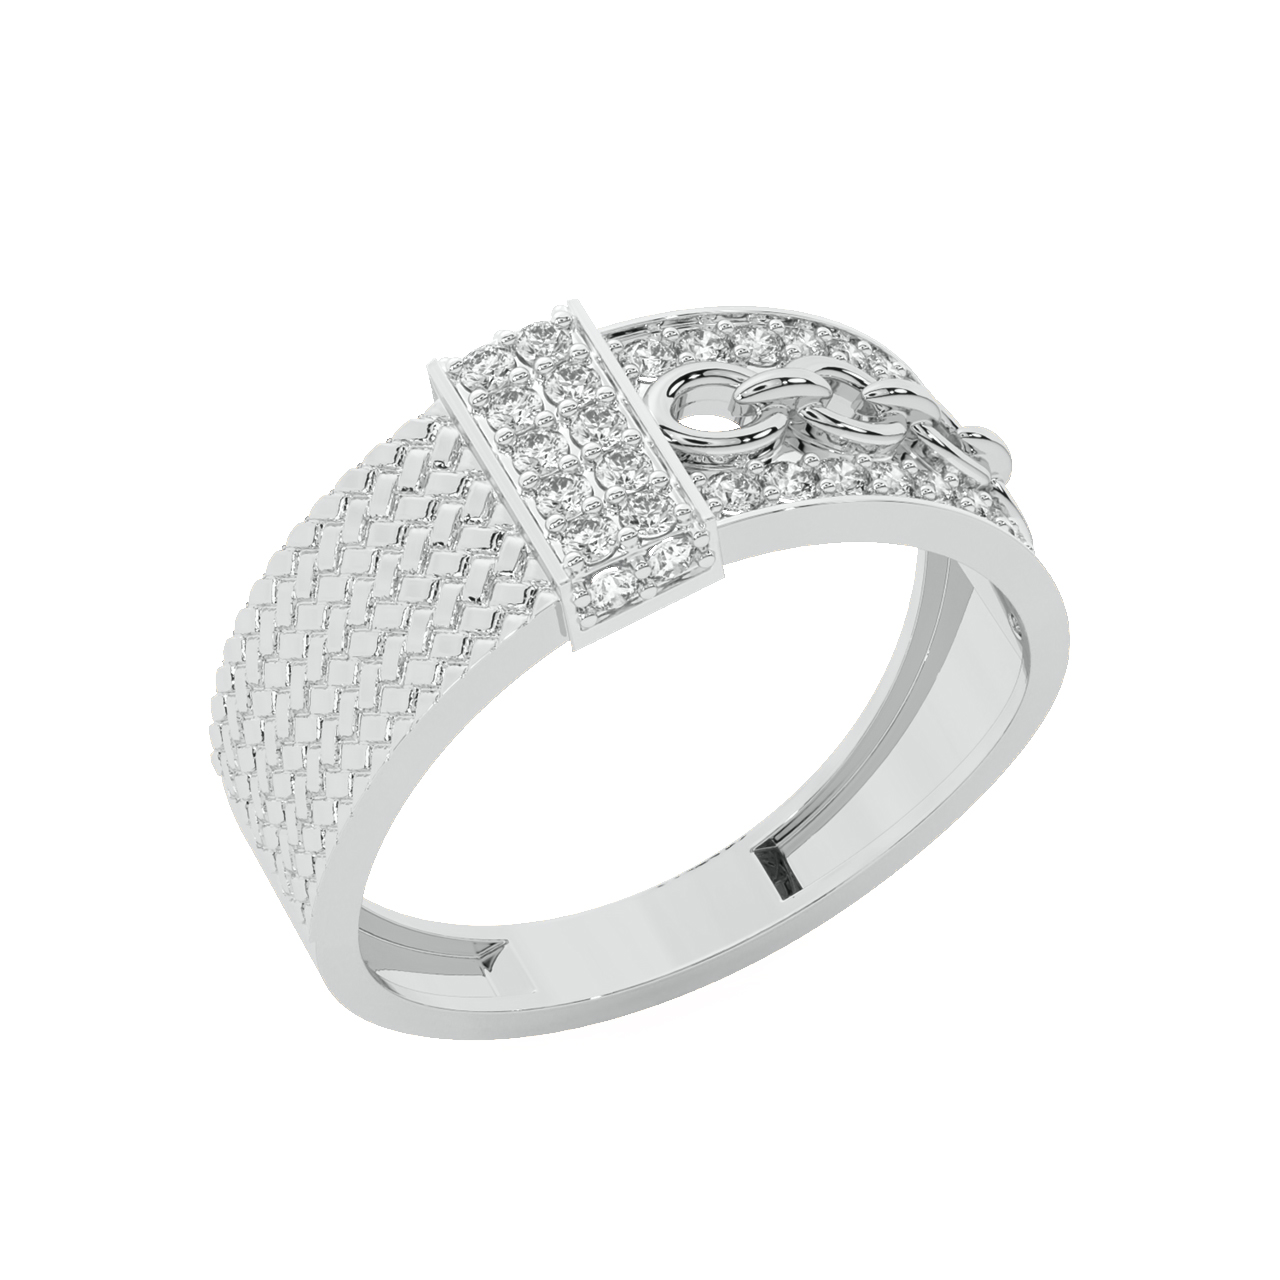 Evanica Round Diamond Ring For Men